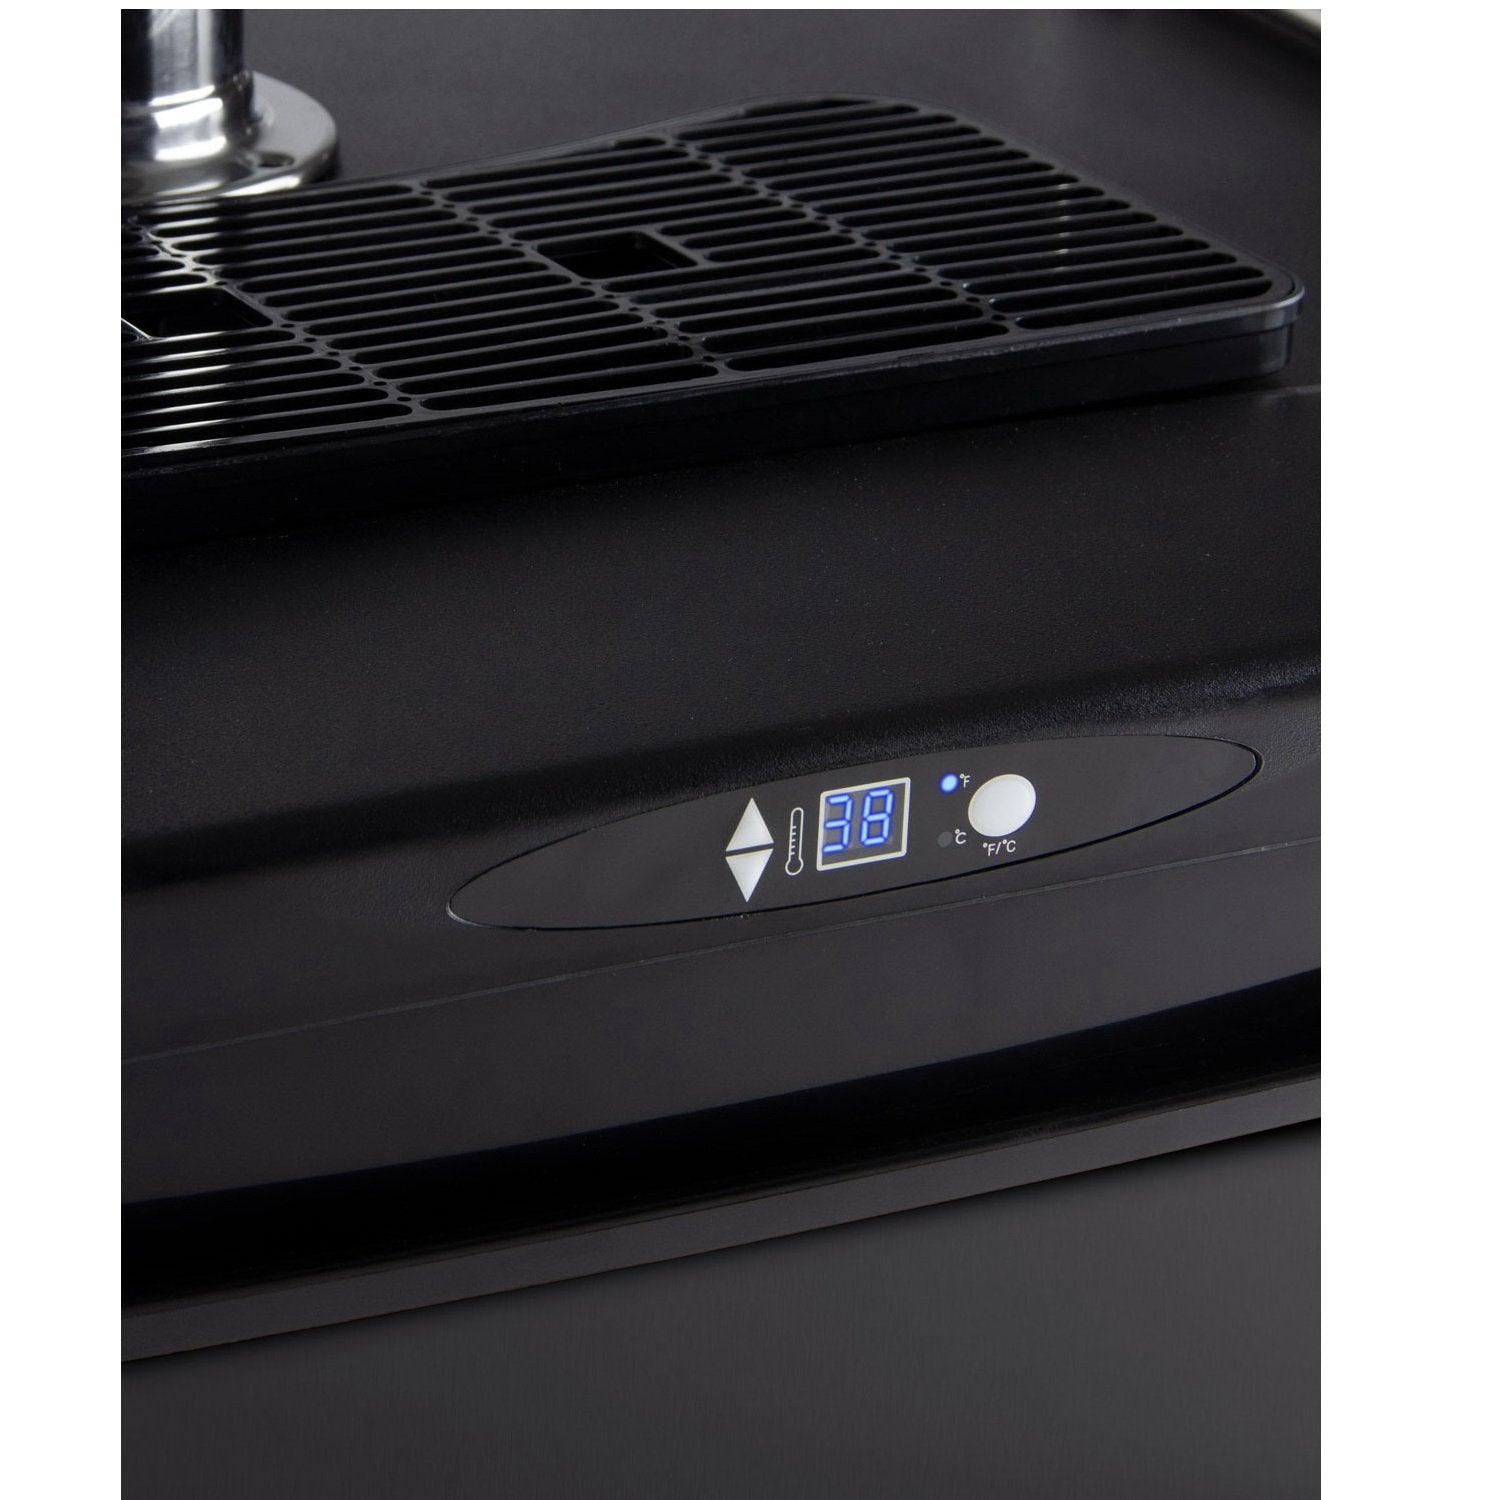 Kegco Single Tap Faucet Full Size Commercial Grade Digital Kegerator - Black Cabinet with Black Door